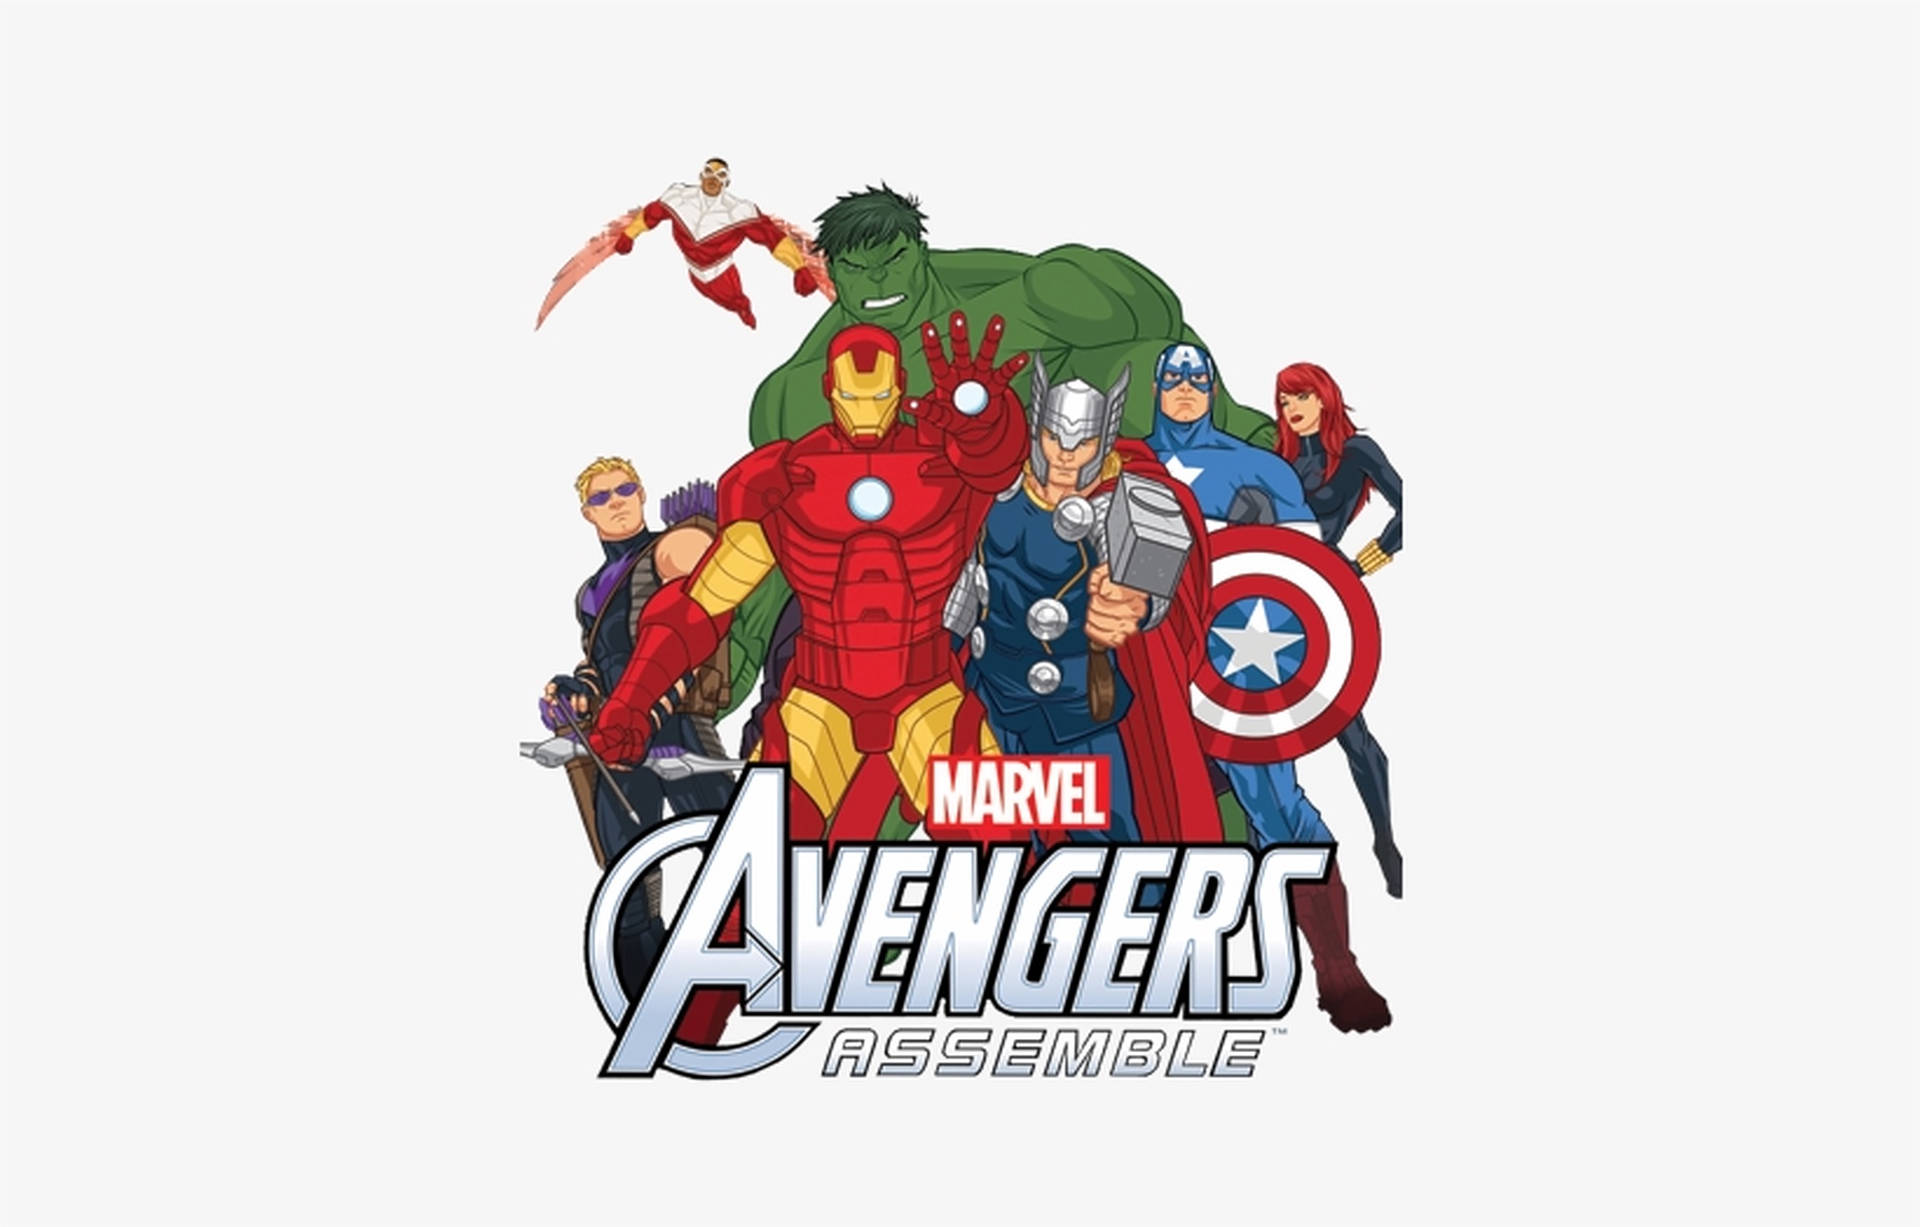 Avengersversammeln Sich In Kraftvoller Pose. Wallpaper